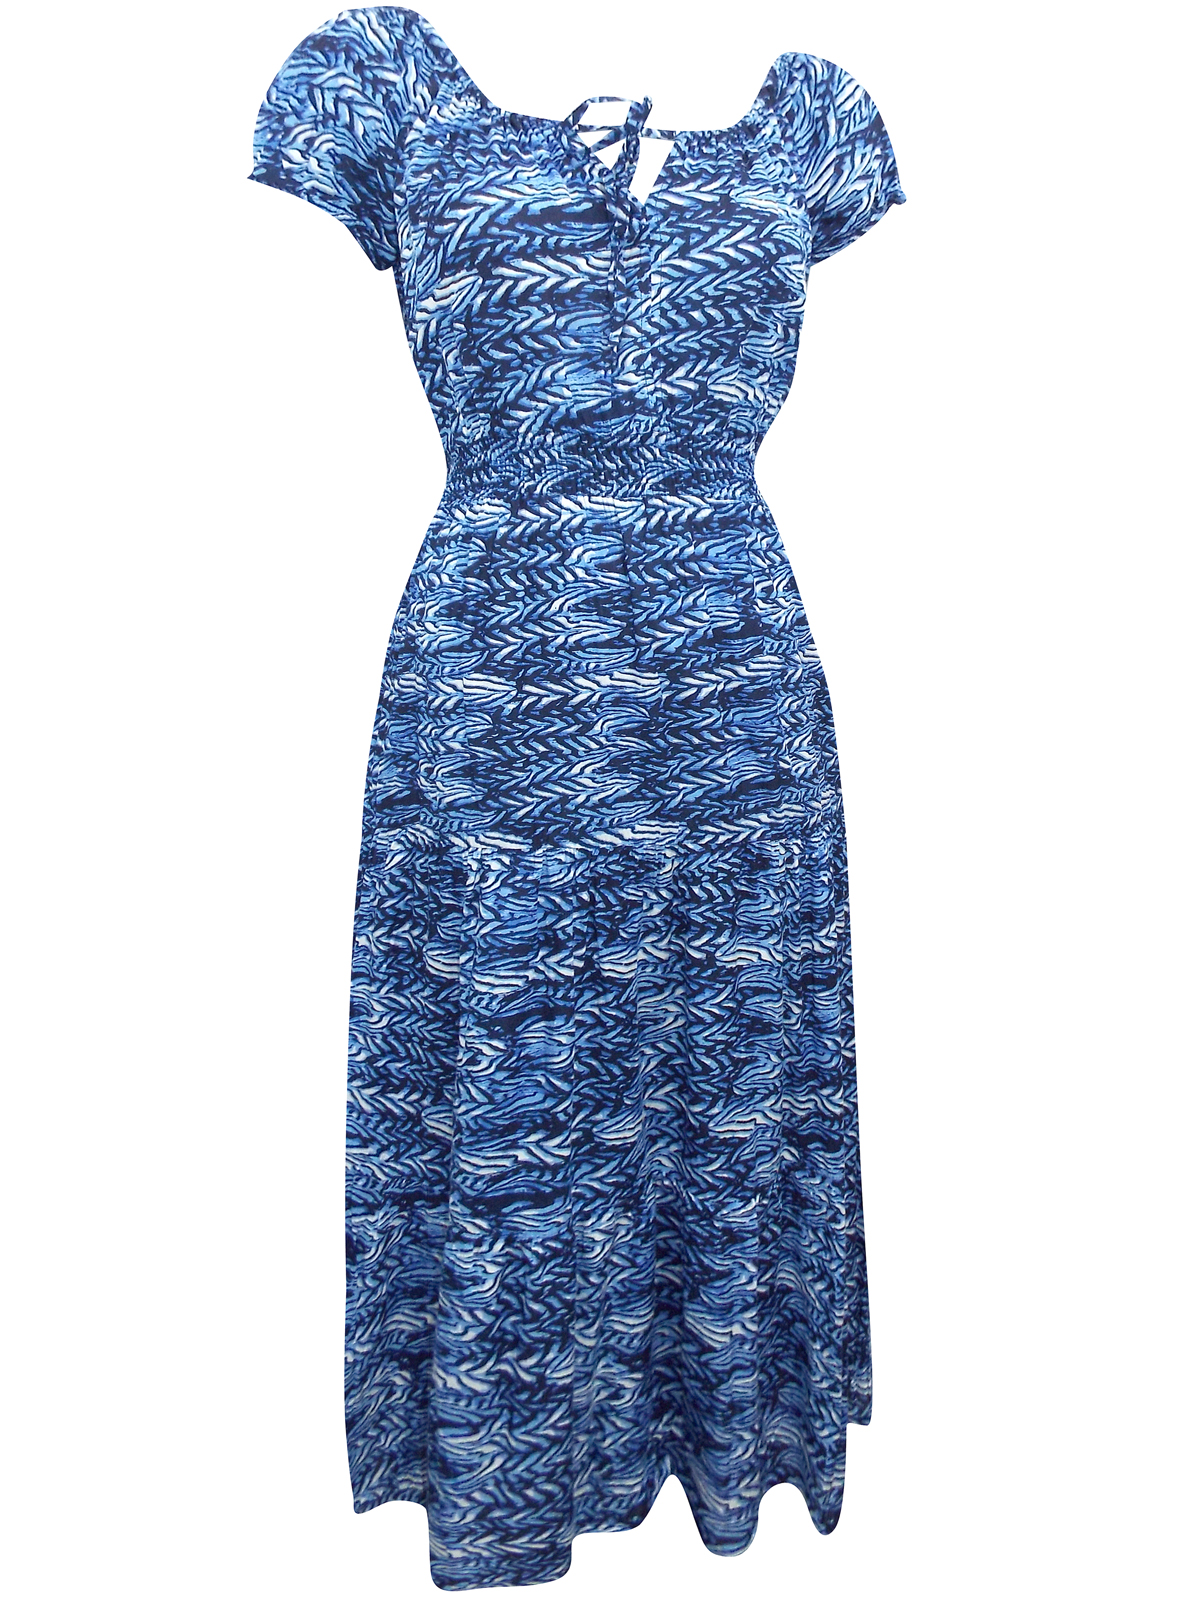 Arista - - Arista BLUE Cap Sleeve Smocked Waist Dress - Size 10 to 20